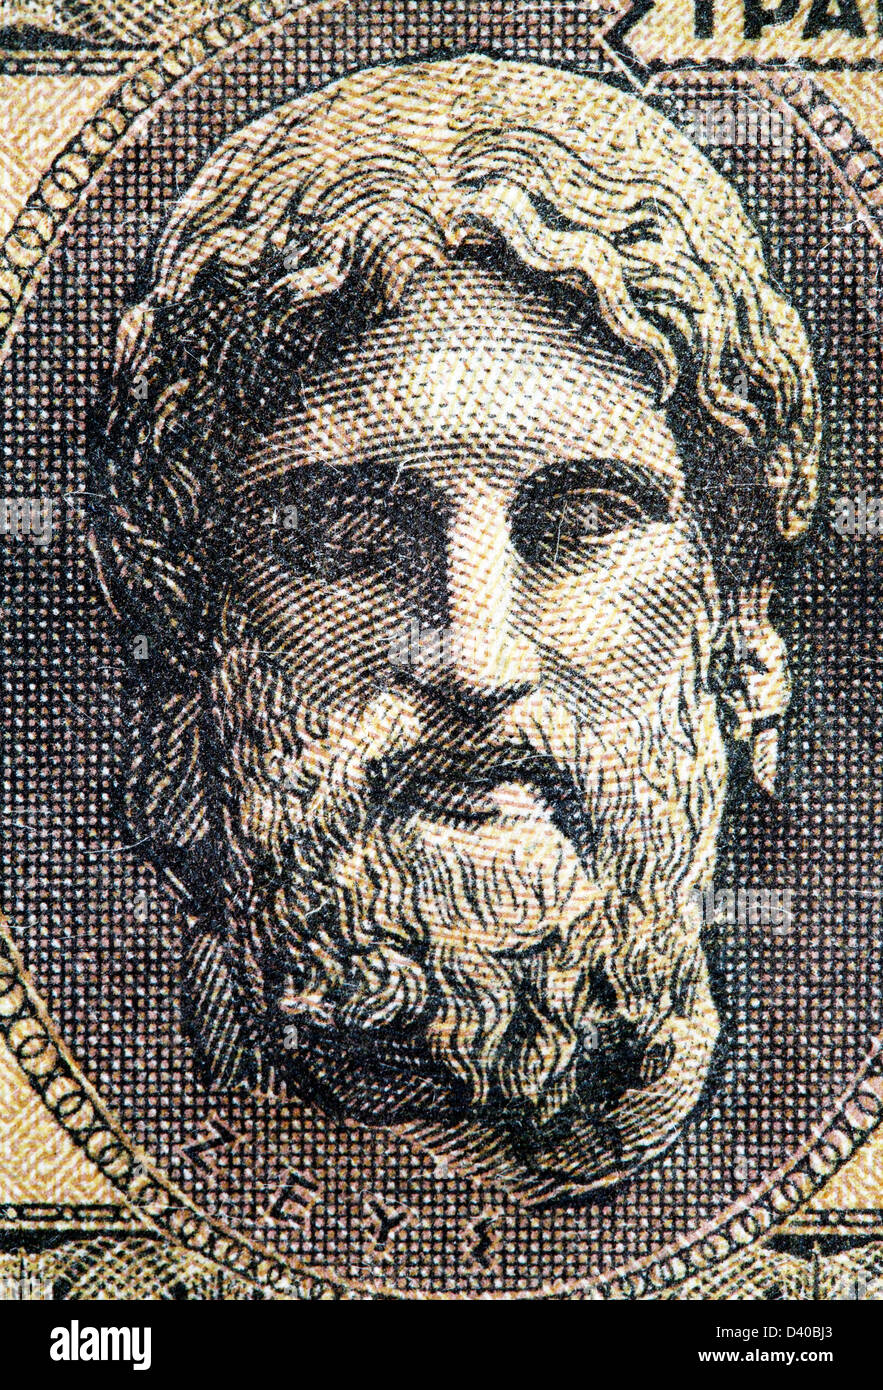 Head of Zeusfrom 500000 Drachmas banknote, Greece, 1944 Stock Photo